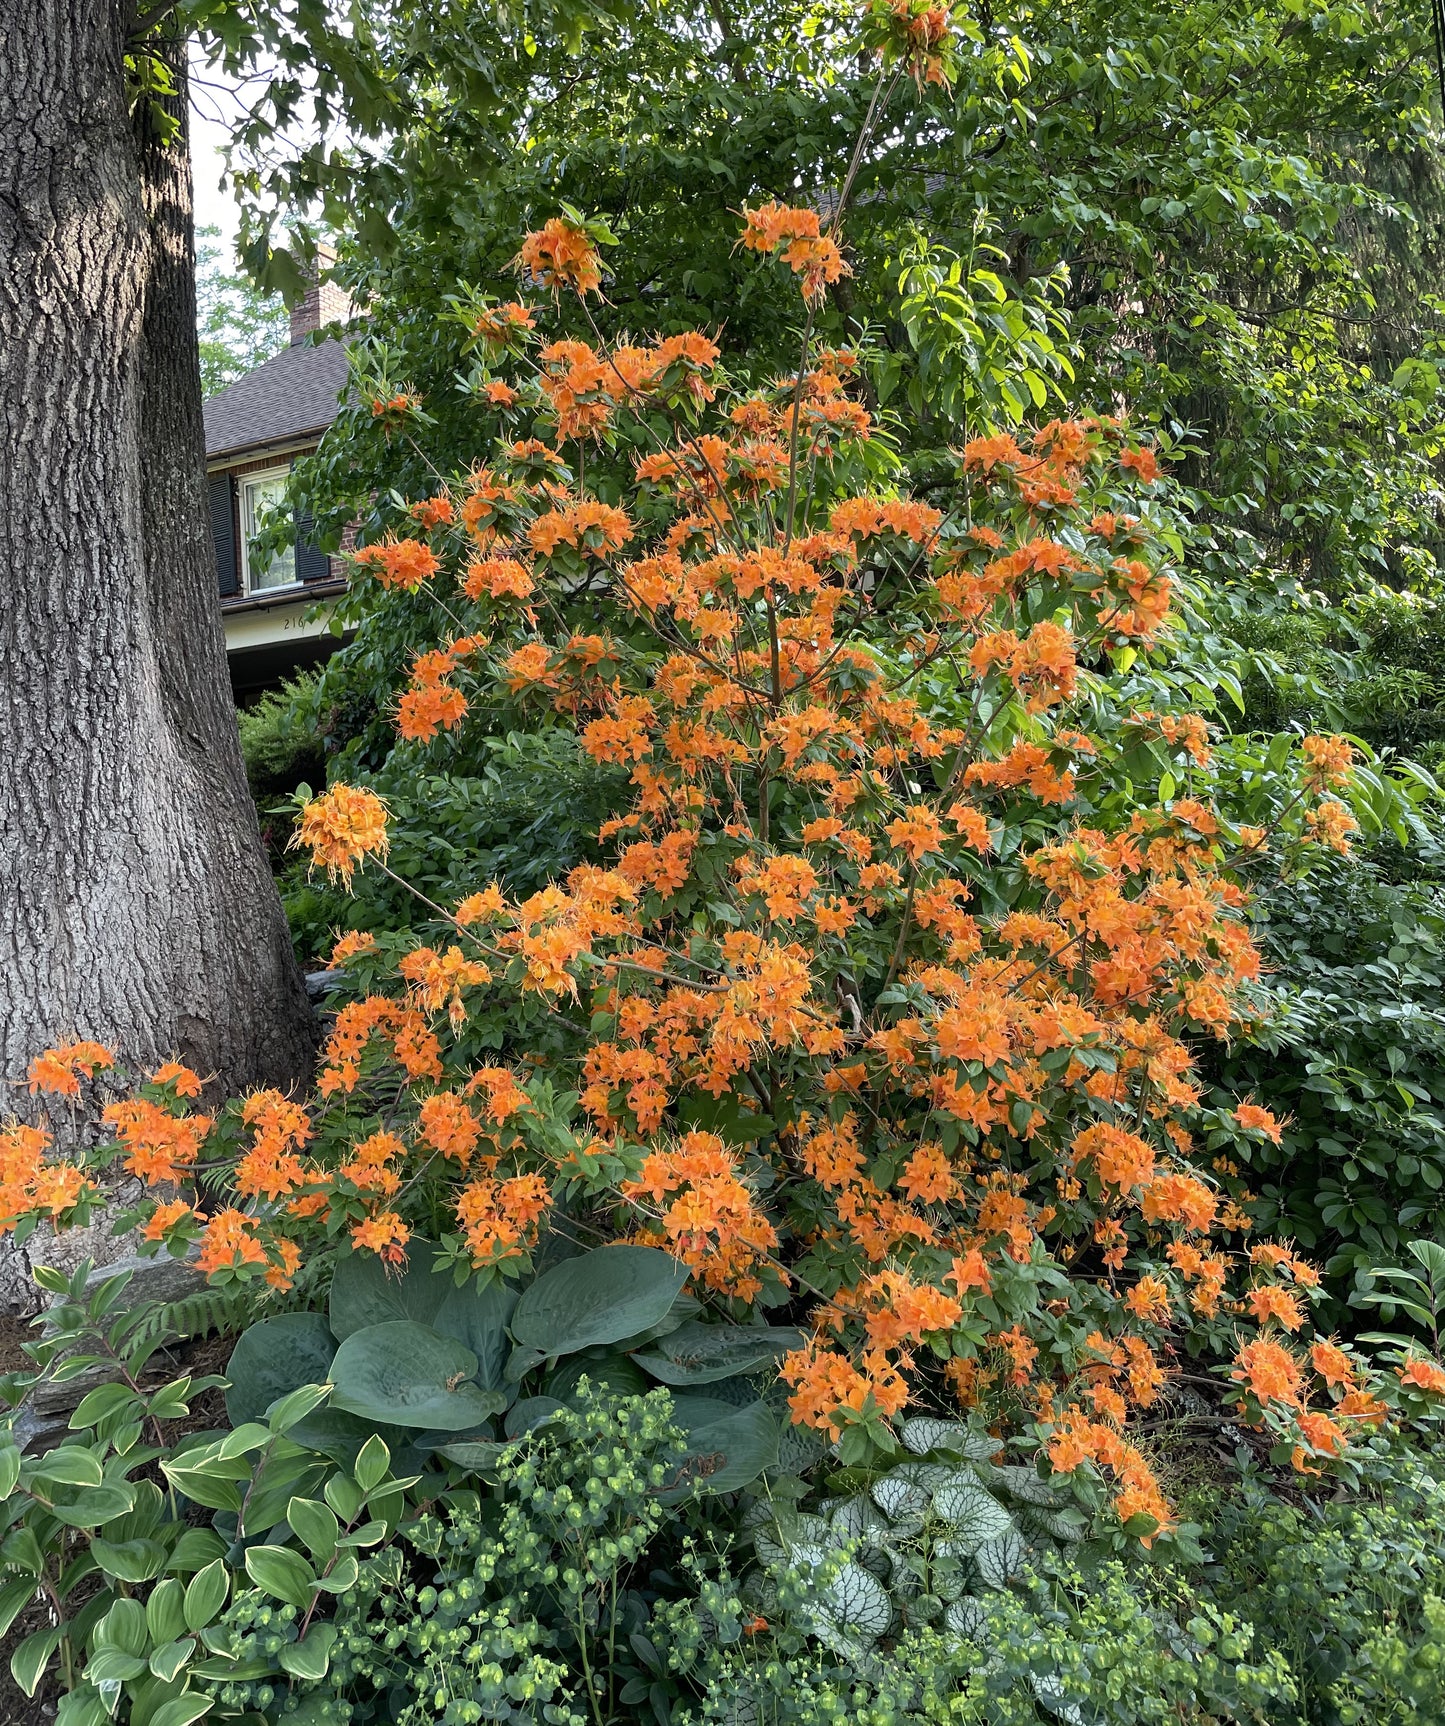 Flame azalea plant with orange flowers